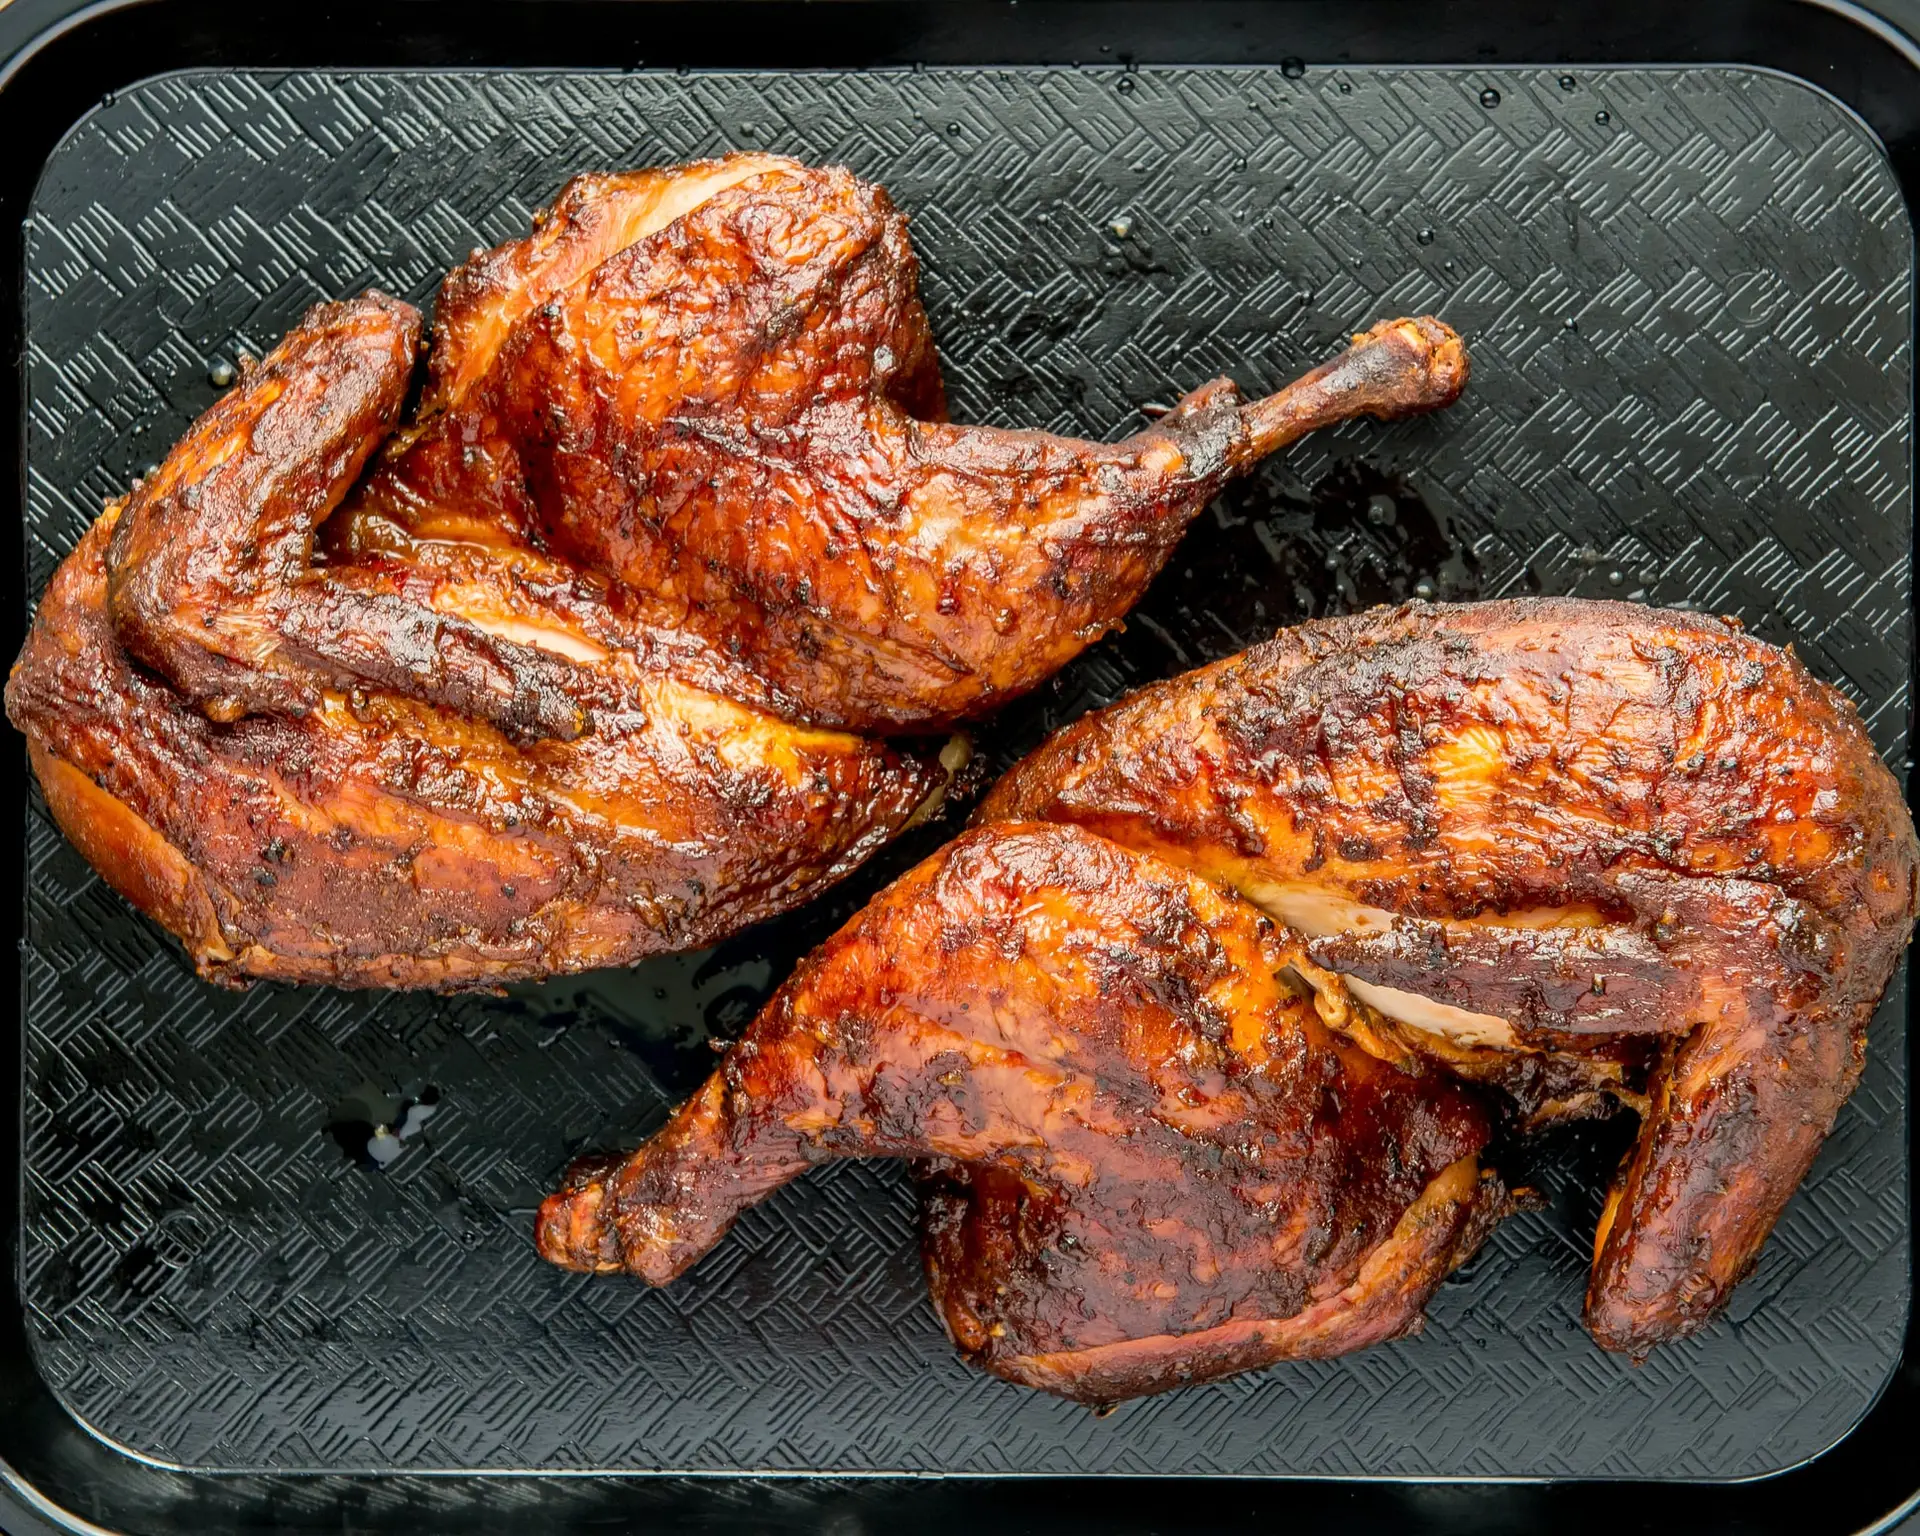 Broasted Chicken halves